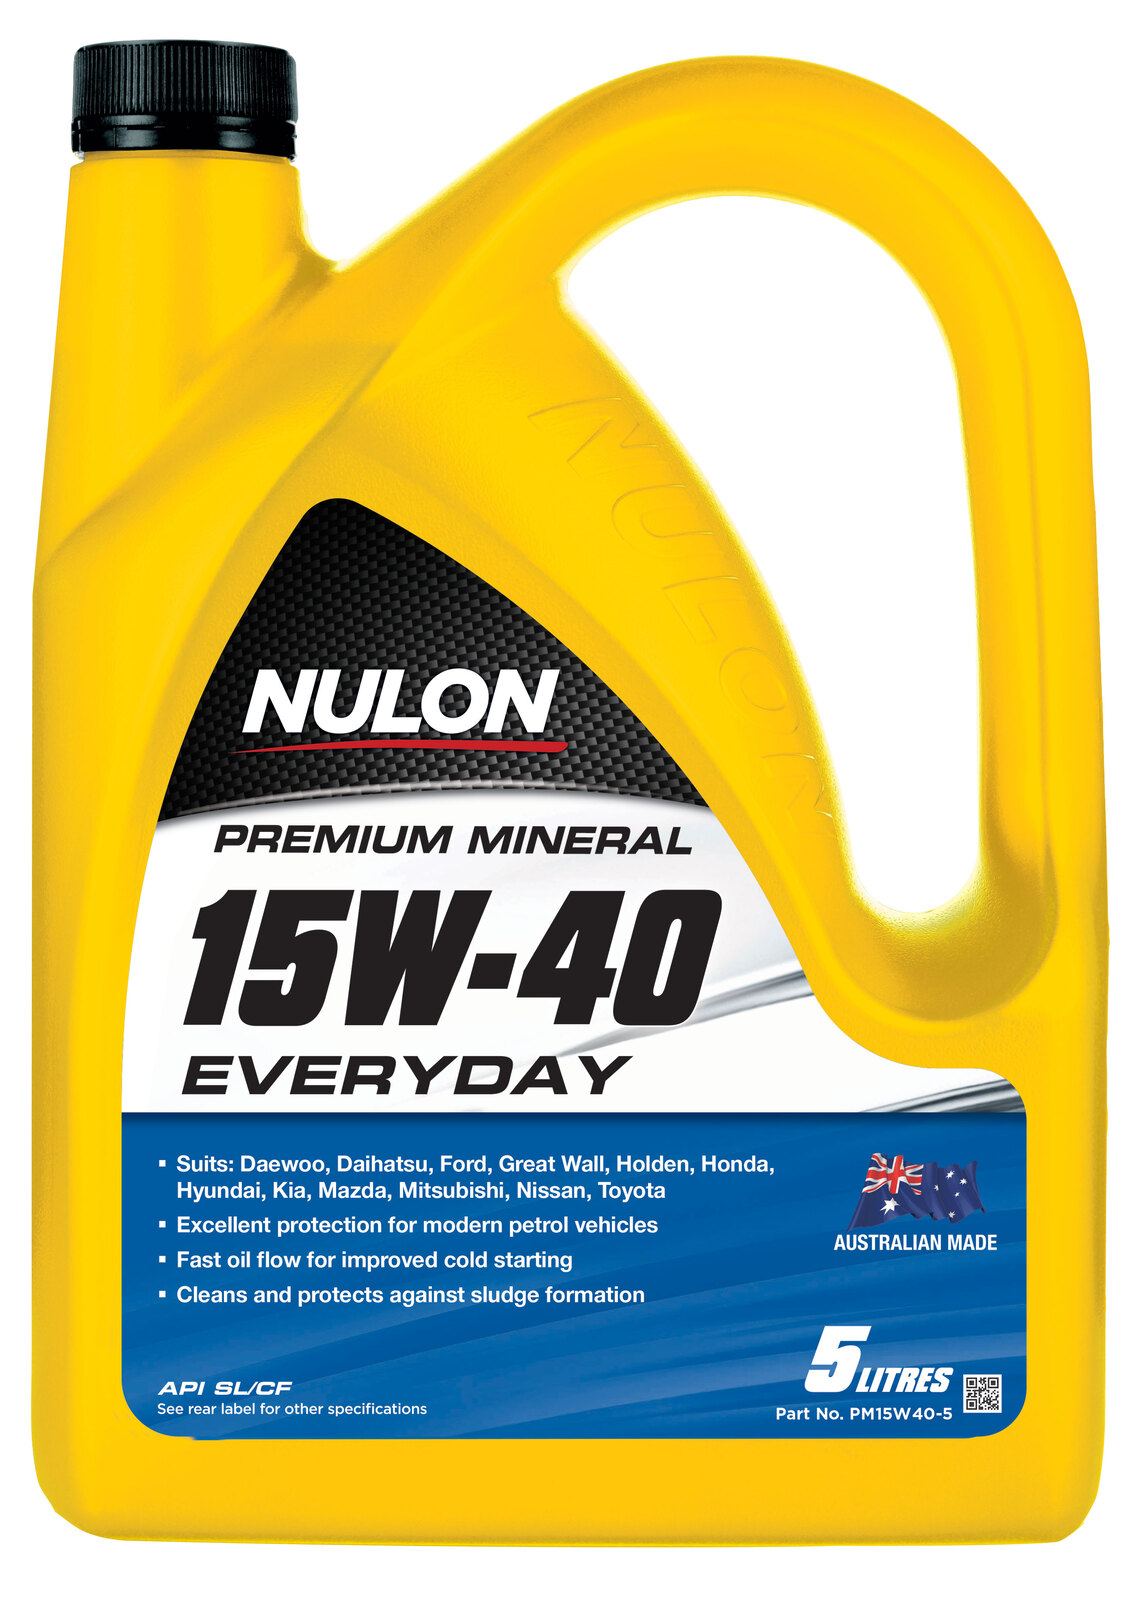 NULON Premium Mineral 15W40 Engine Oil, Each